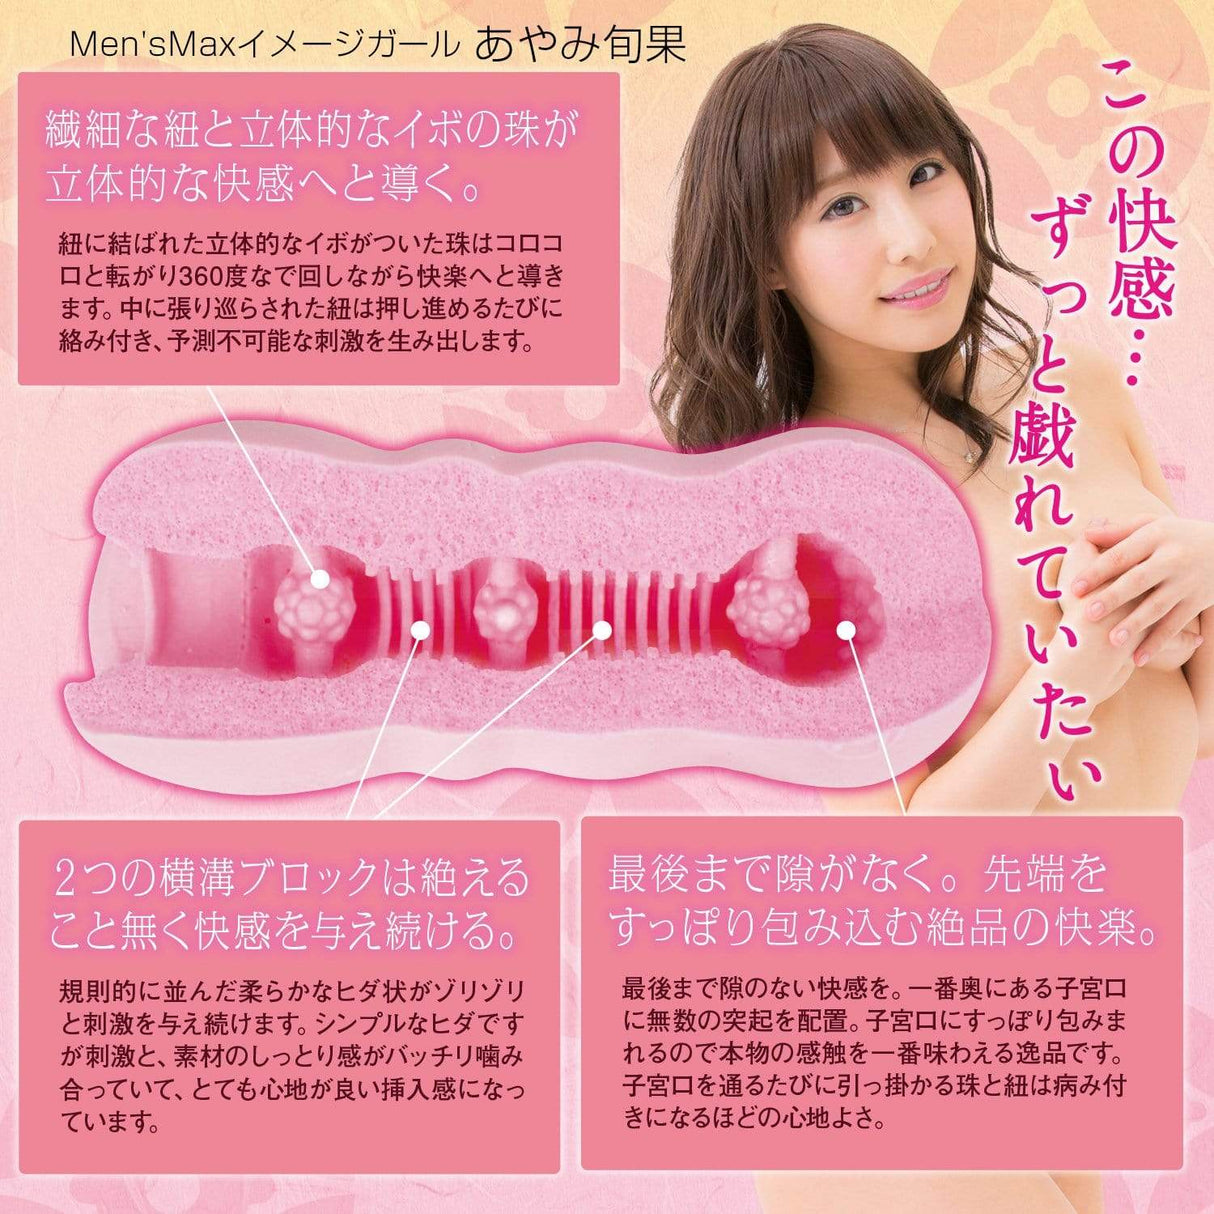 Men's Max - Tamamusubi Feel Soft Stroker Masturbator (Pink) MM1018 CherryAffairs